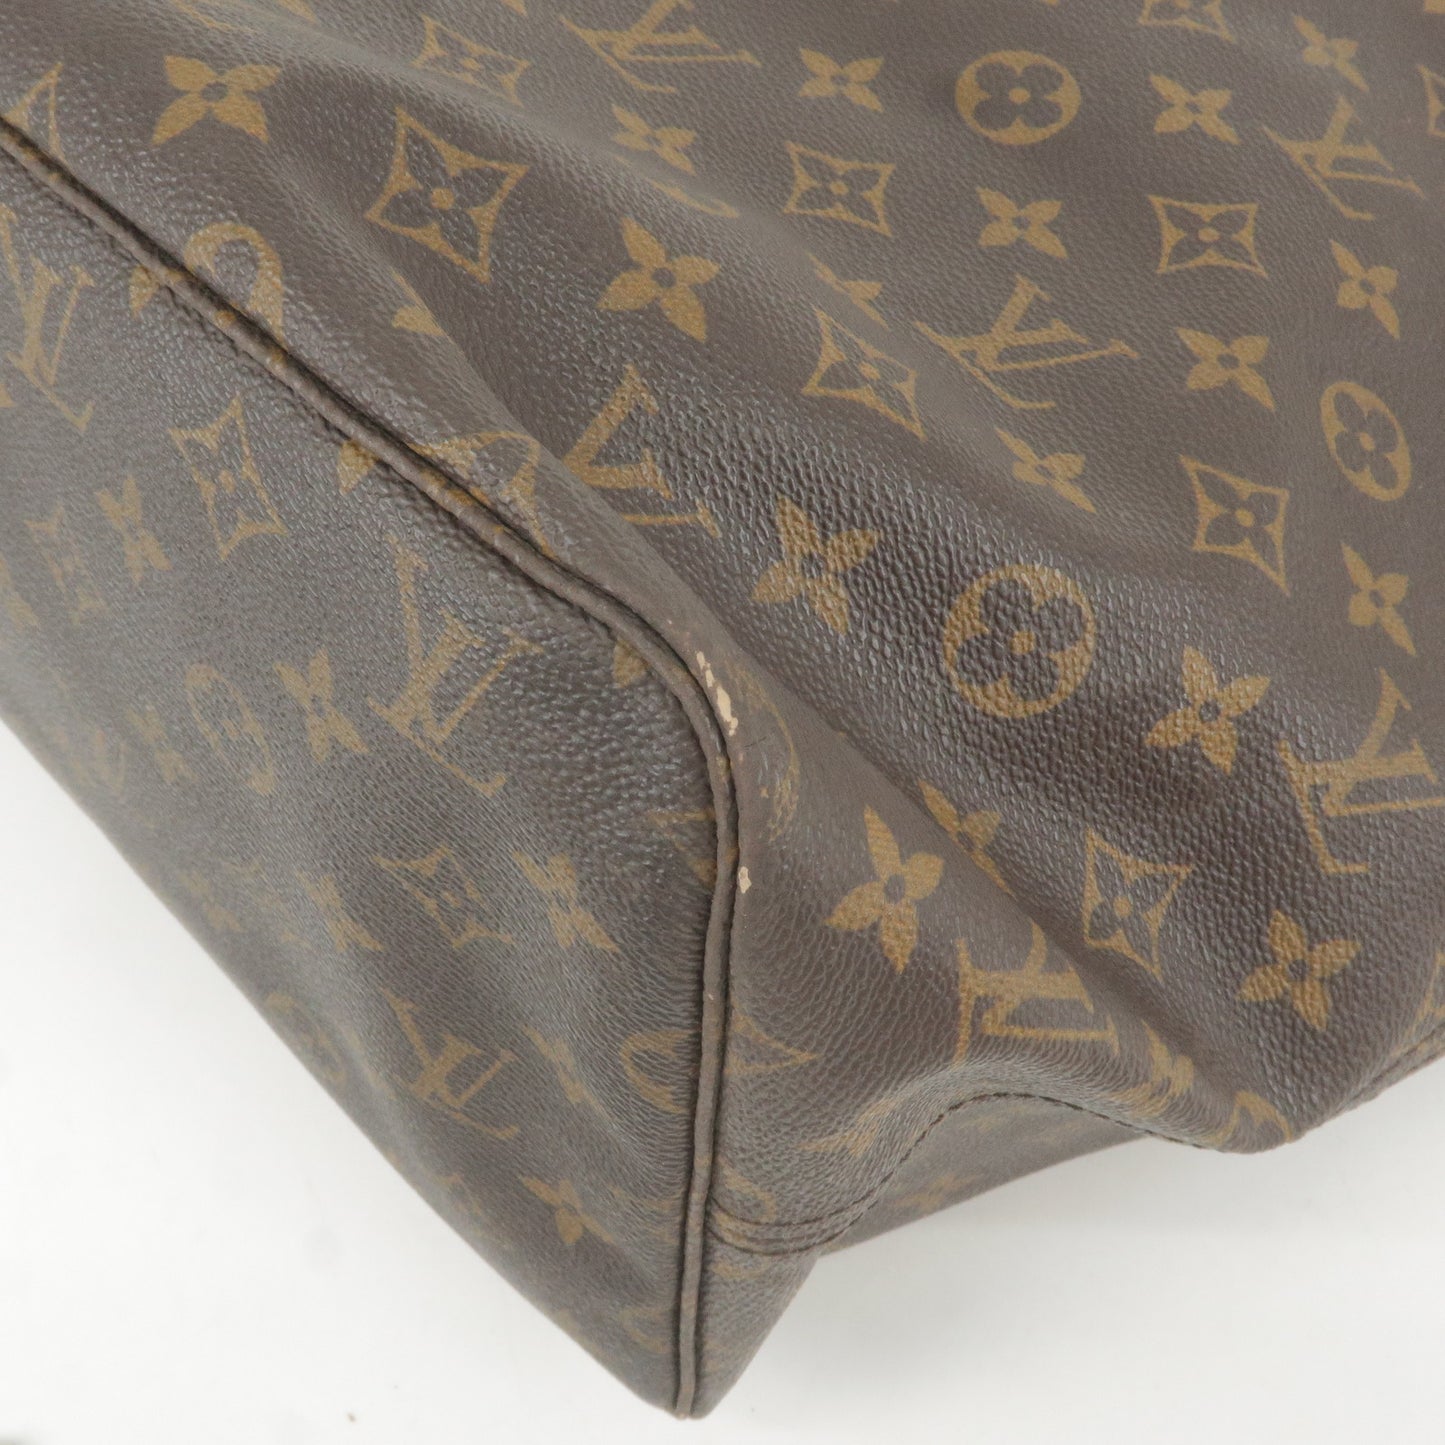 Louis Vuitton Monogram Neverfull GM Tote Bag Hand Bag M40157